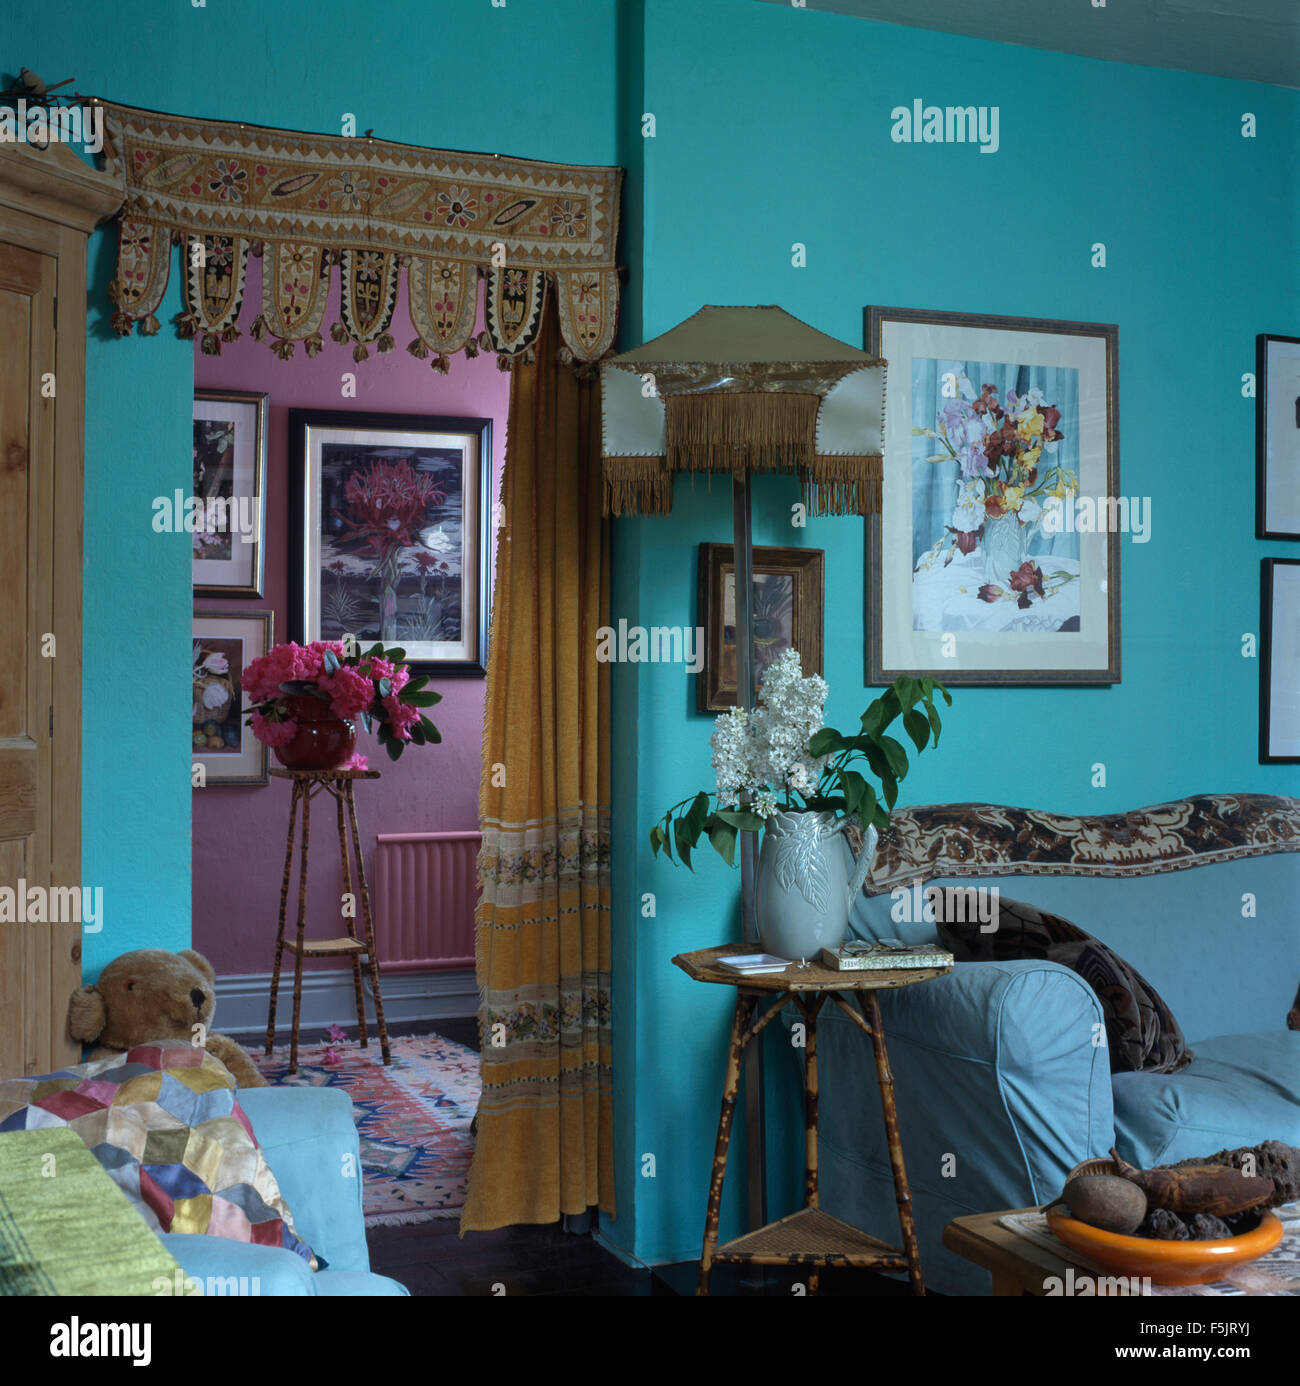 Wandbehang zimmer -Fotos und -Bildmaterial in hoher Auflösung – Alamy